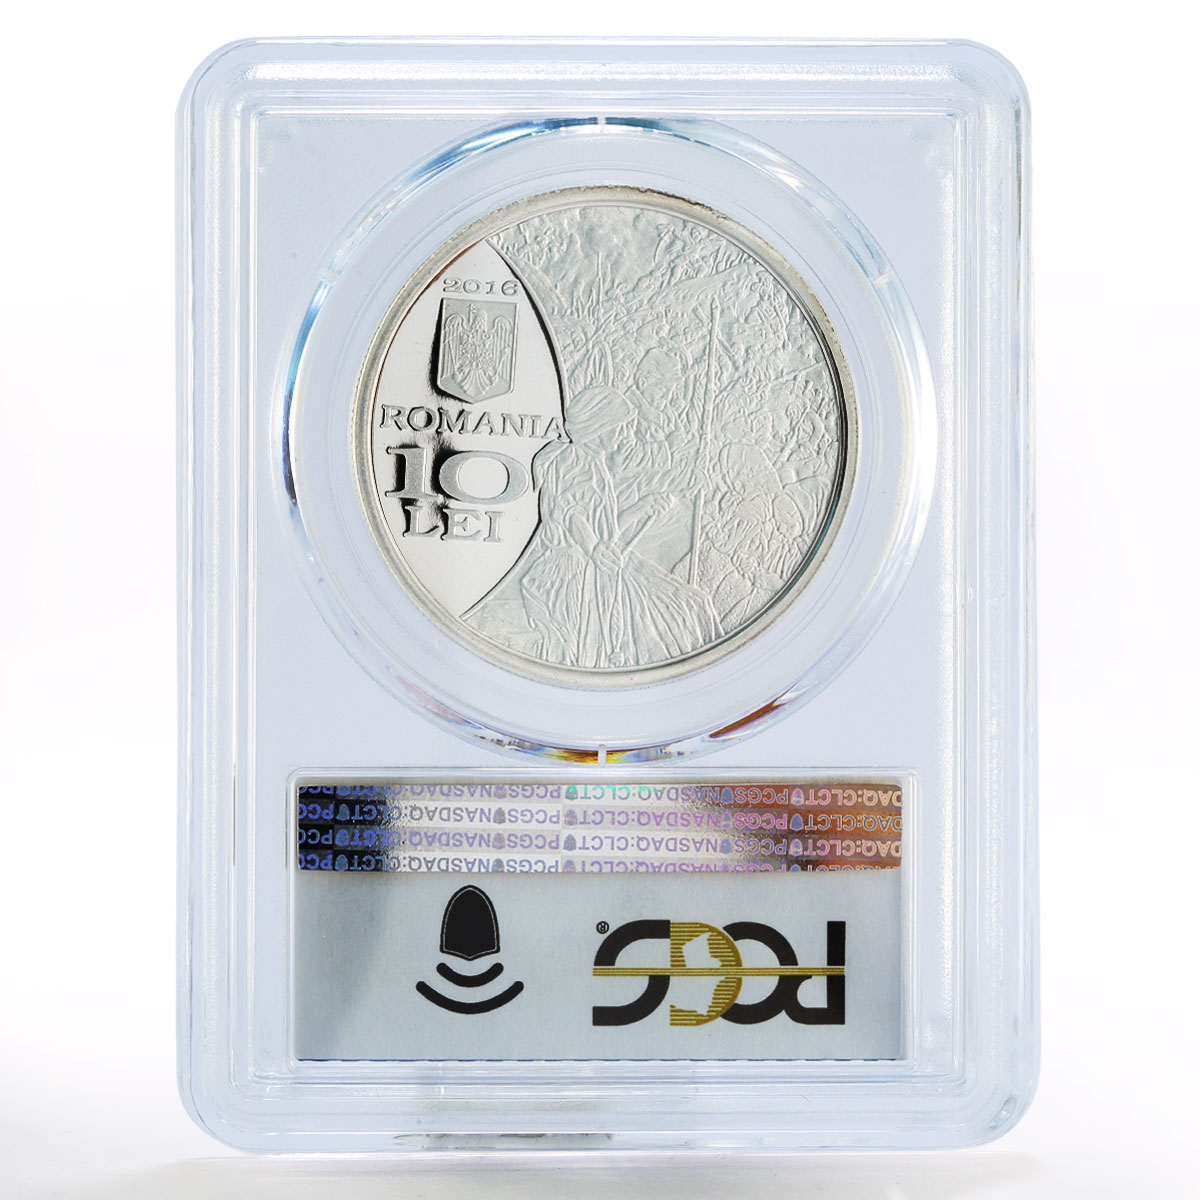 Romania 10 lei 200 Years of George Cosbuc PR70 PCGS silver coin 2016